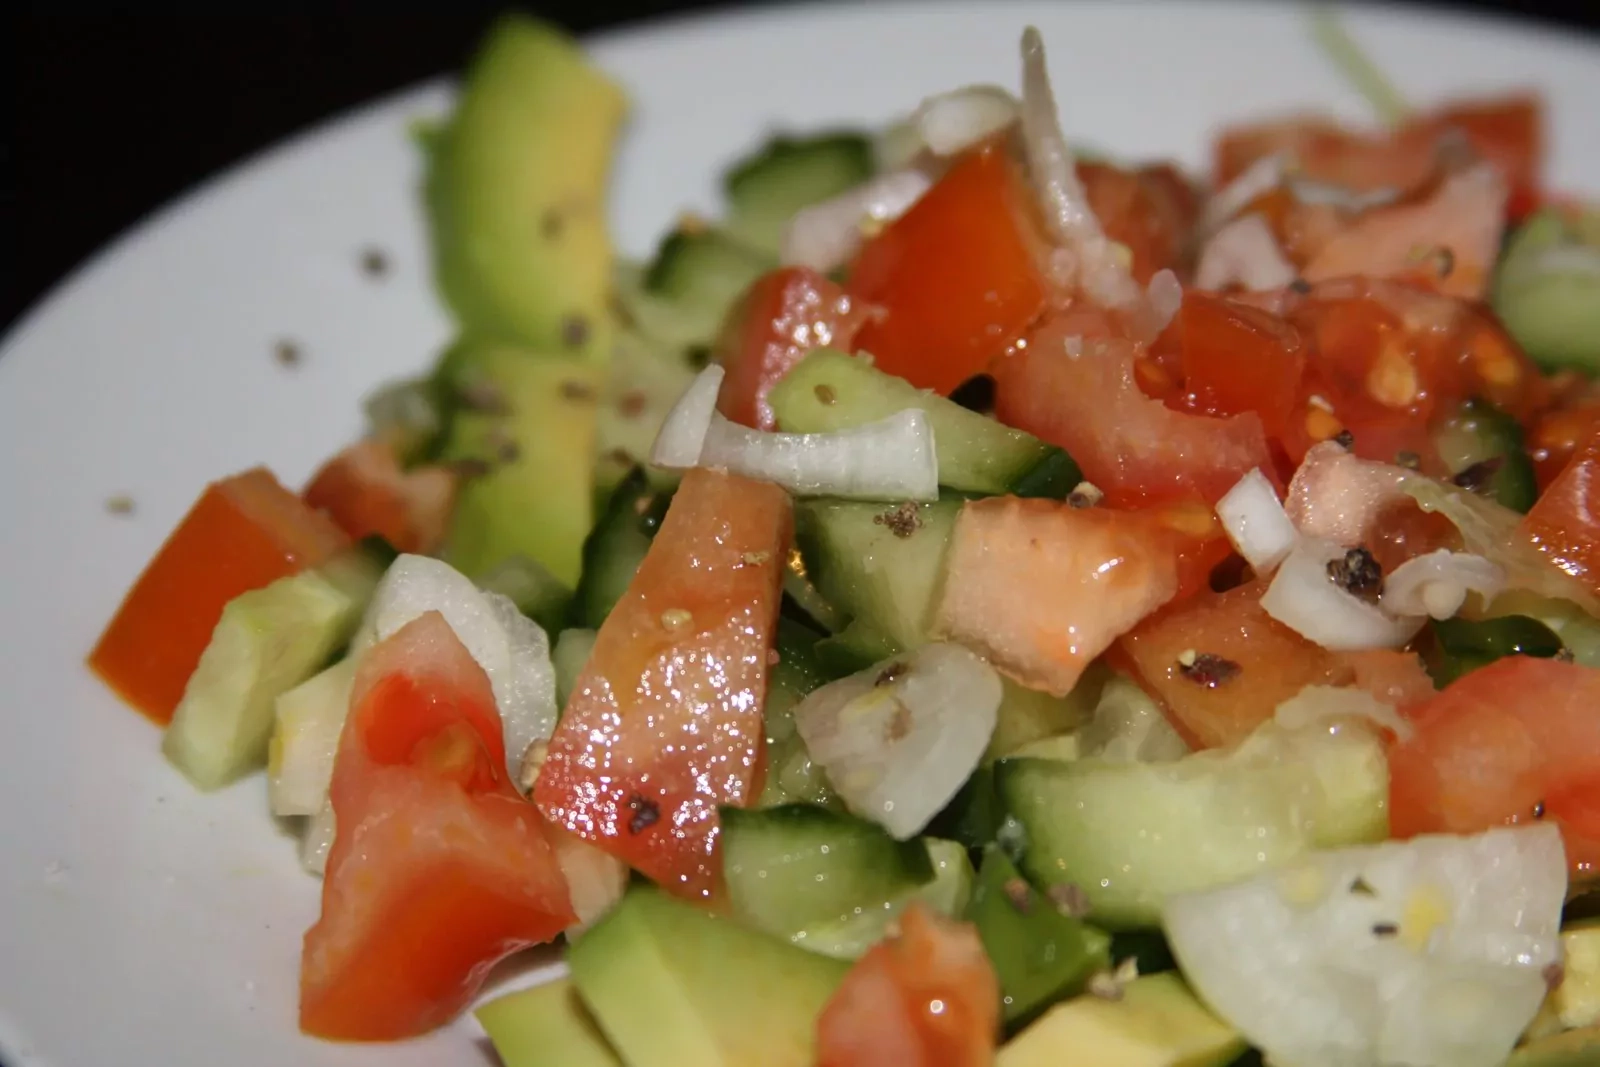 Lengvos ir sočios avokado salotos su pomidorais, agurkais ir svogūnais